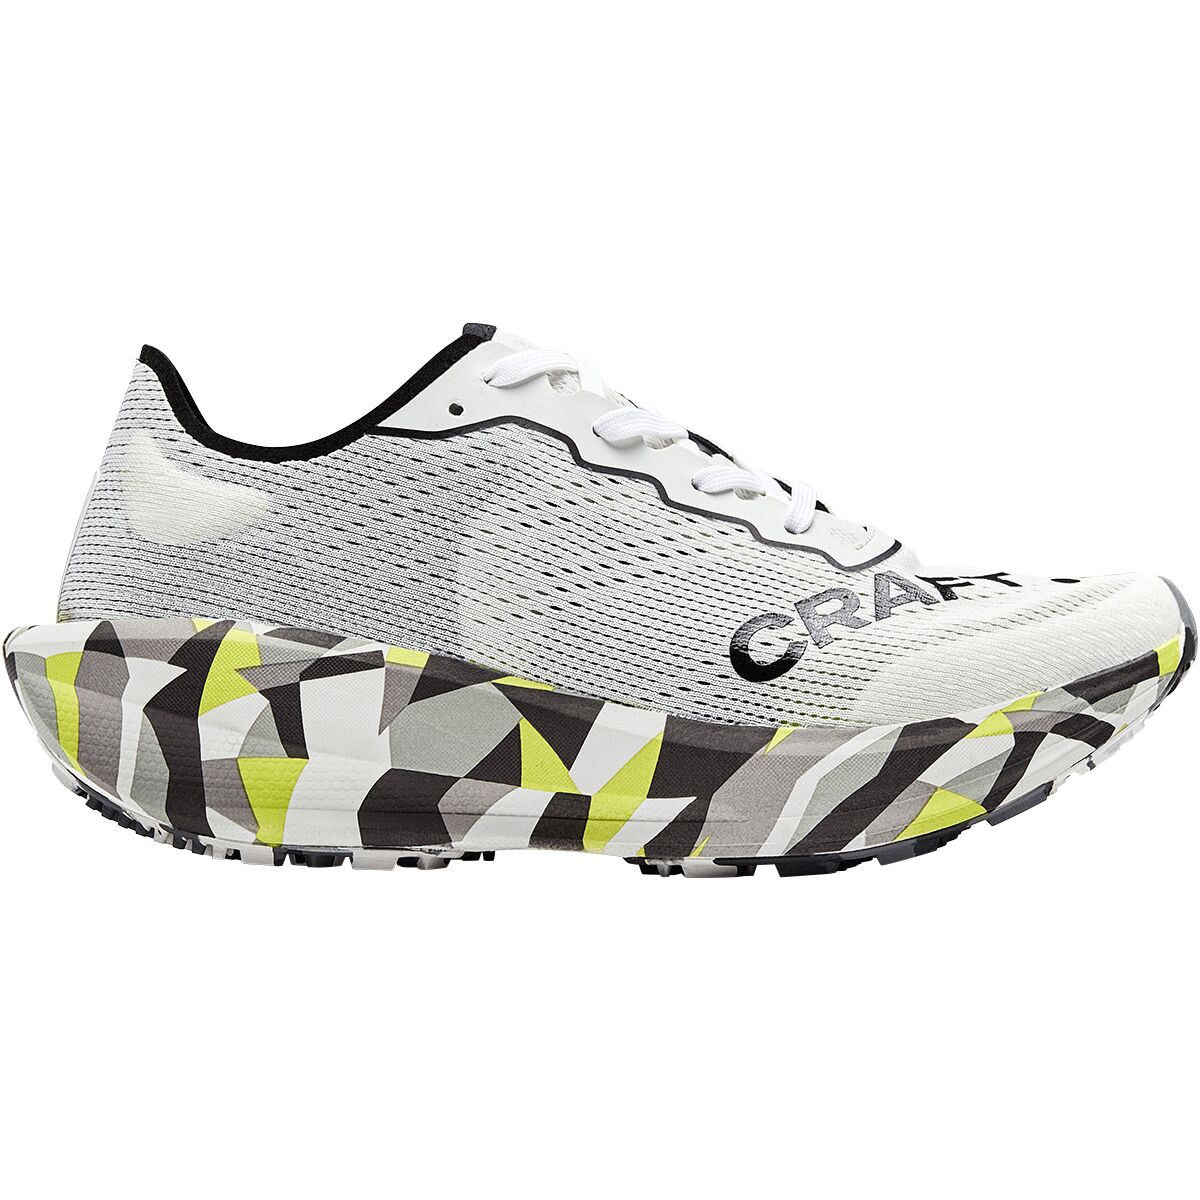 Craft CTM Ultra Carbon 2 Running Shoe – Women’s N Light/P Dazzle Camo, 6.5